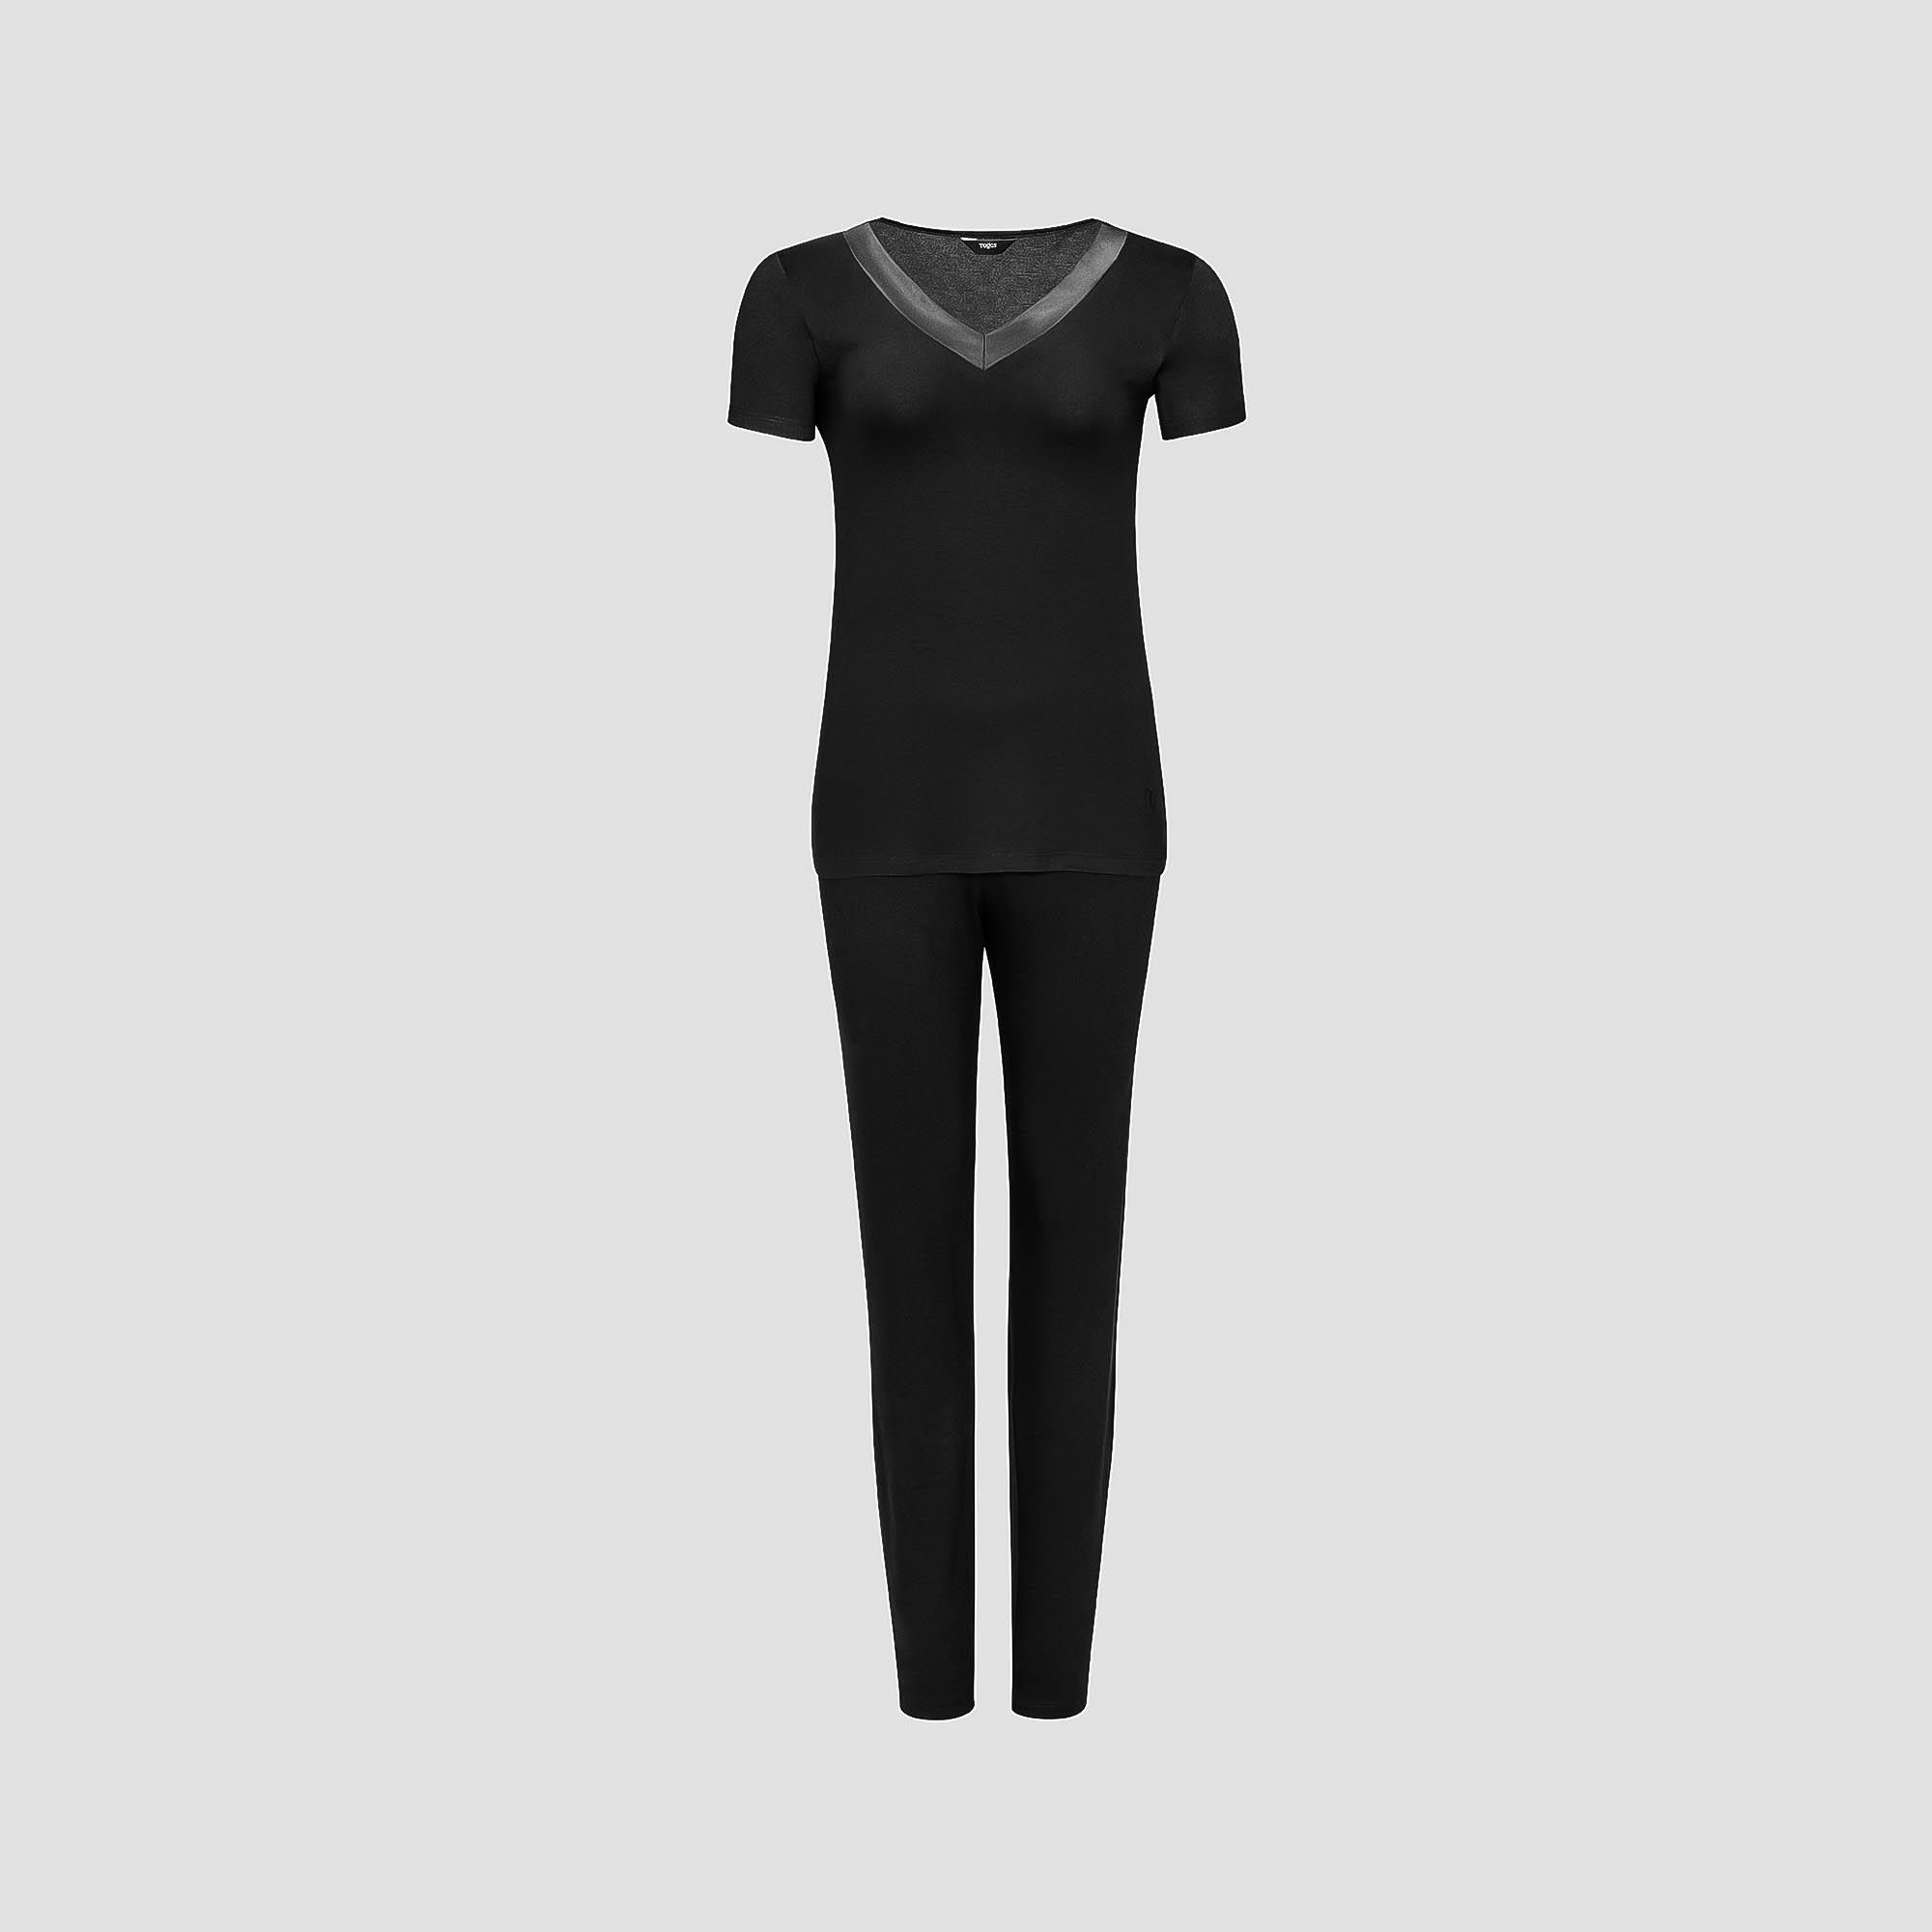 Пижама Togas Ингелла черная женская S(44) 2 предмета пижама футболка